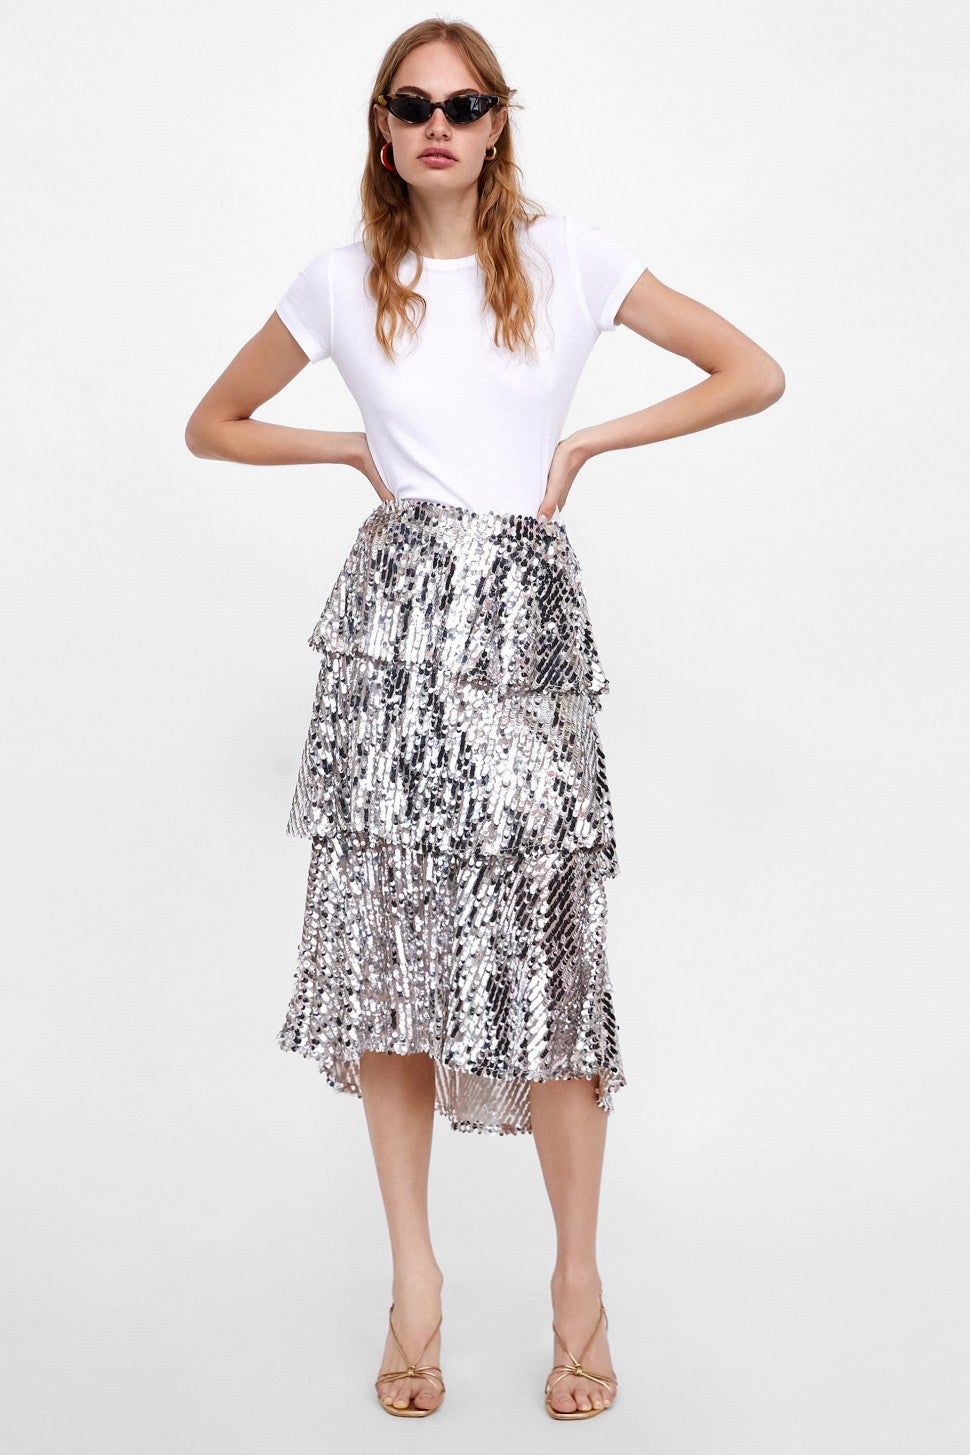 Zara silver sequin skirt